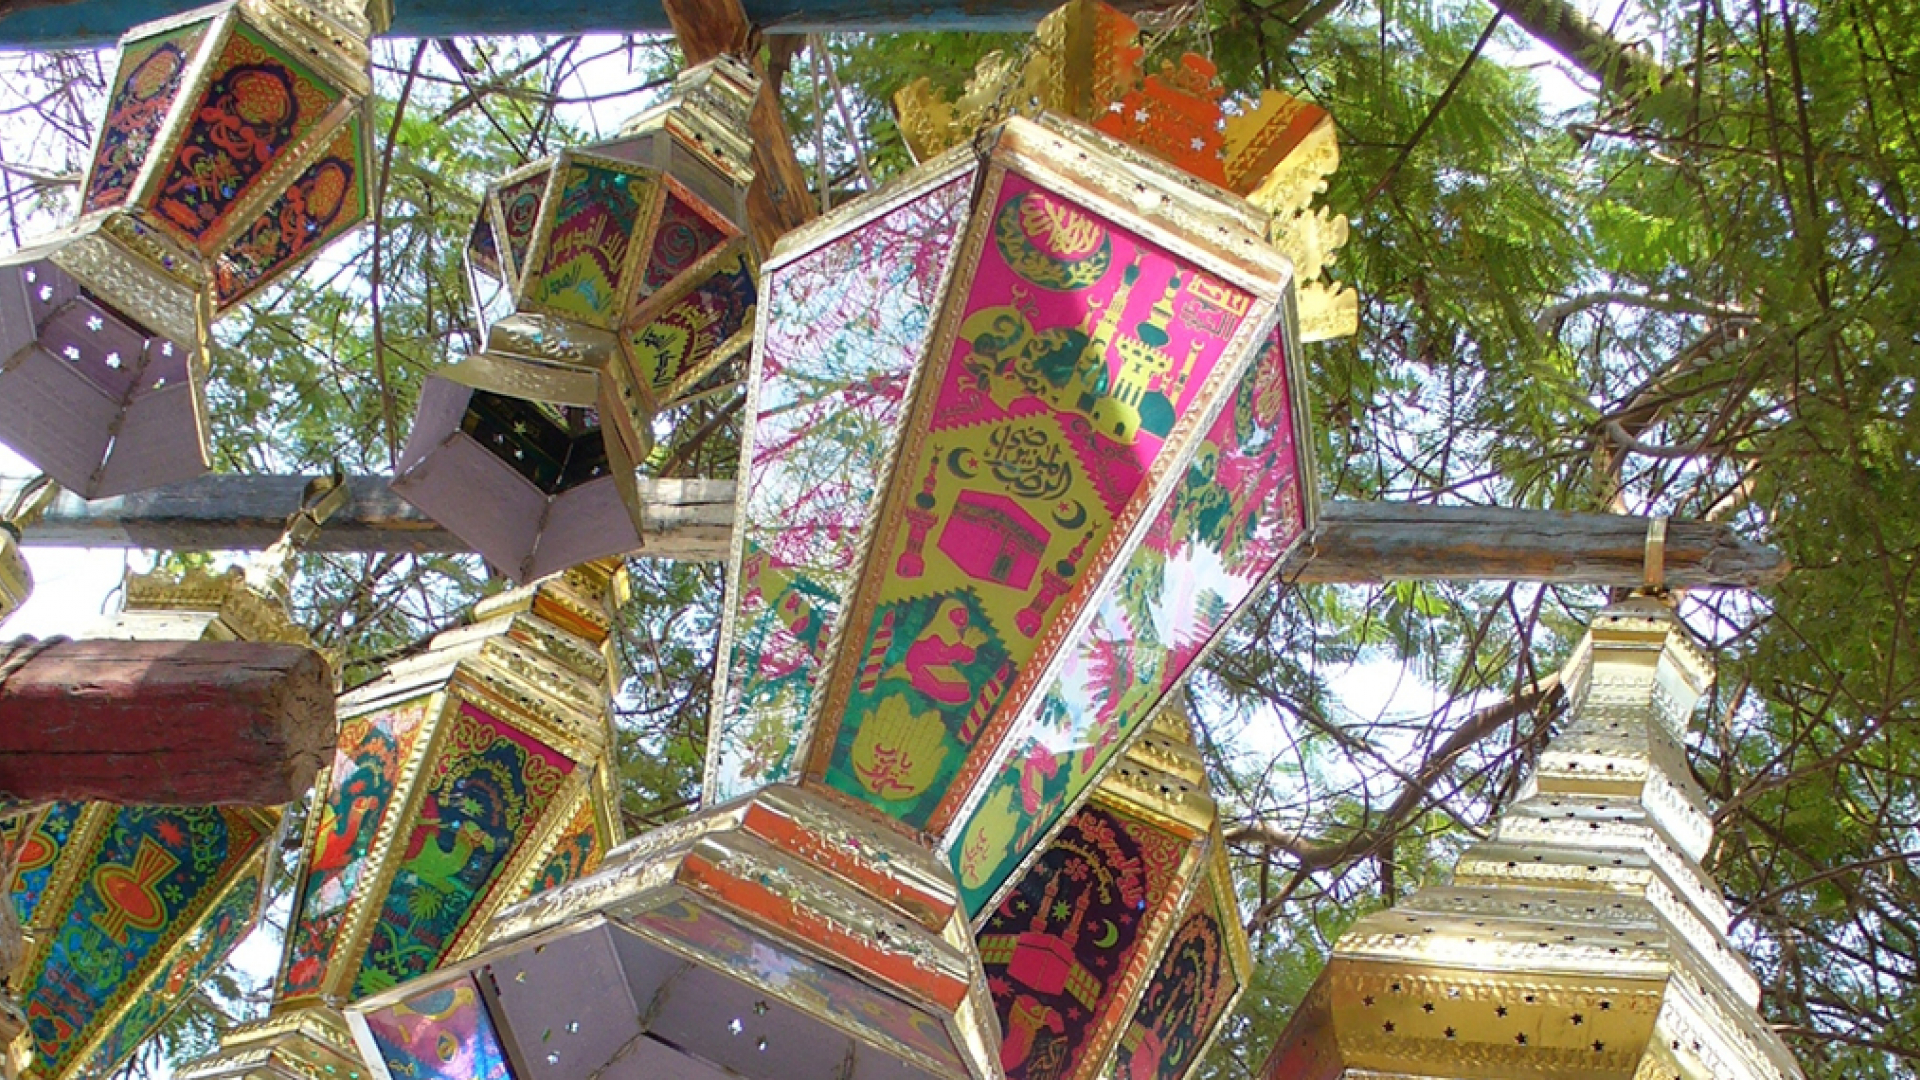 Ramadan lanterns from below.